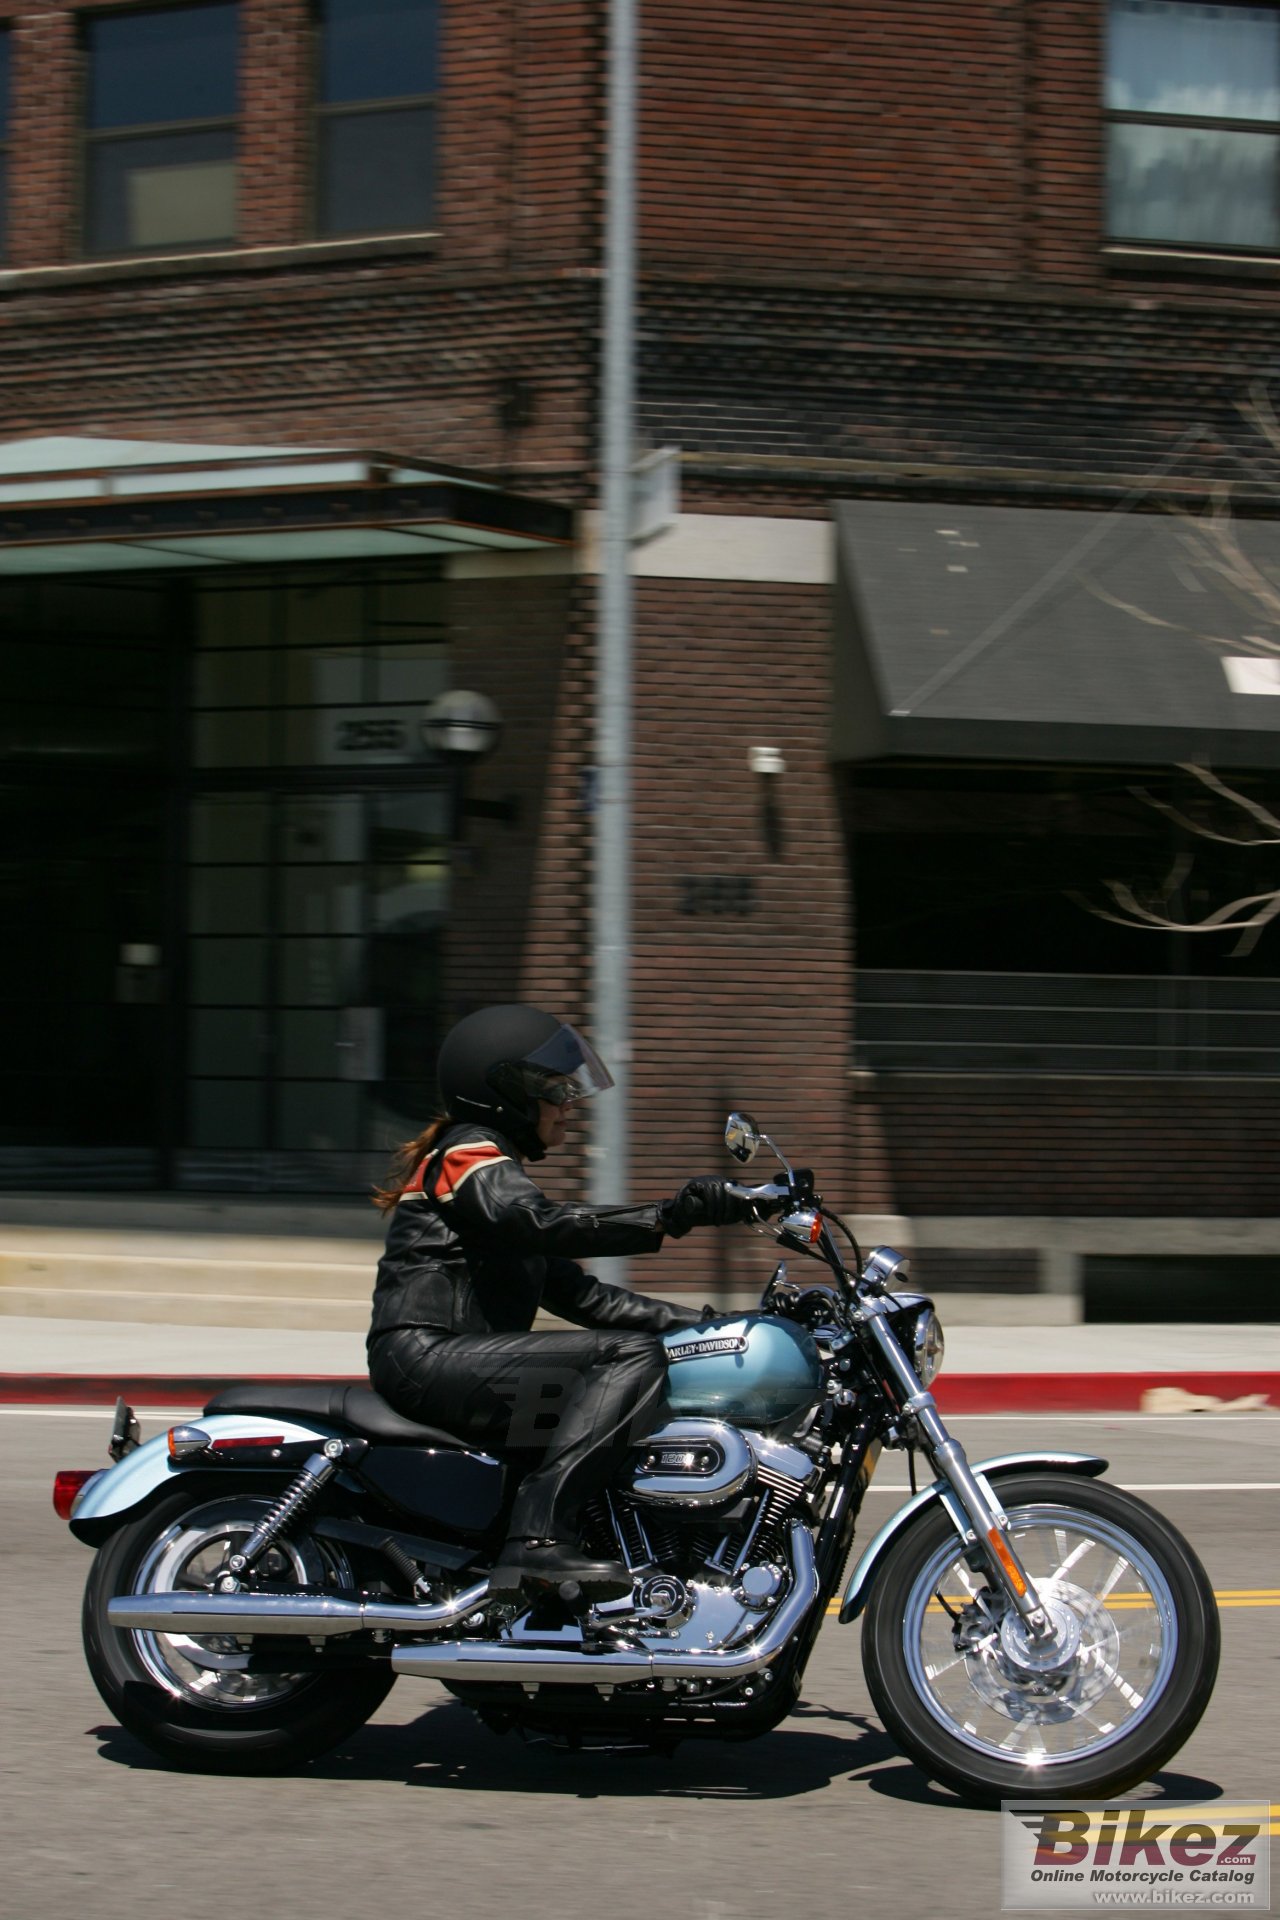 Harley-Davidson XL1200L Sportster Low